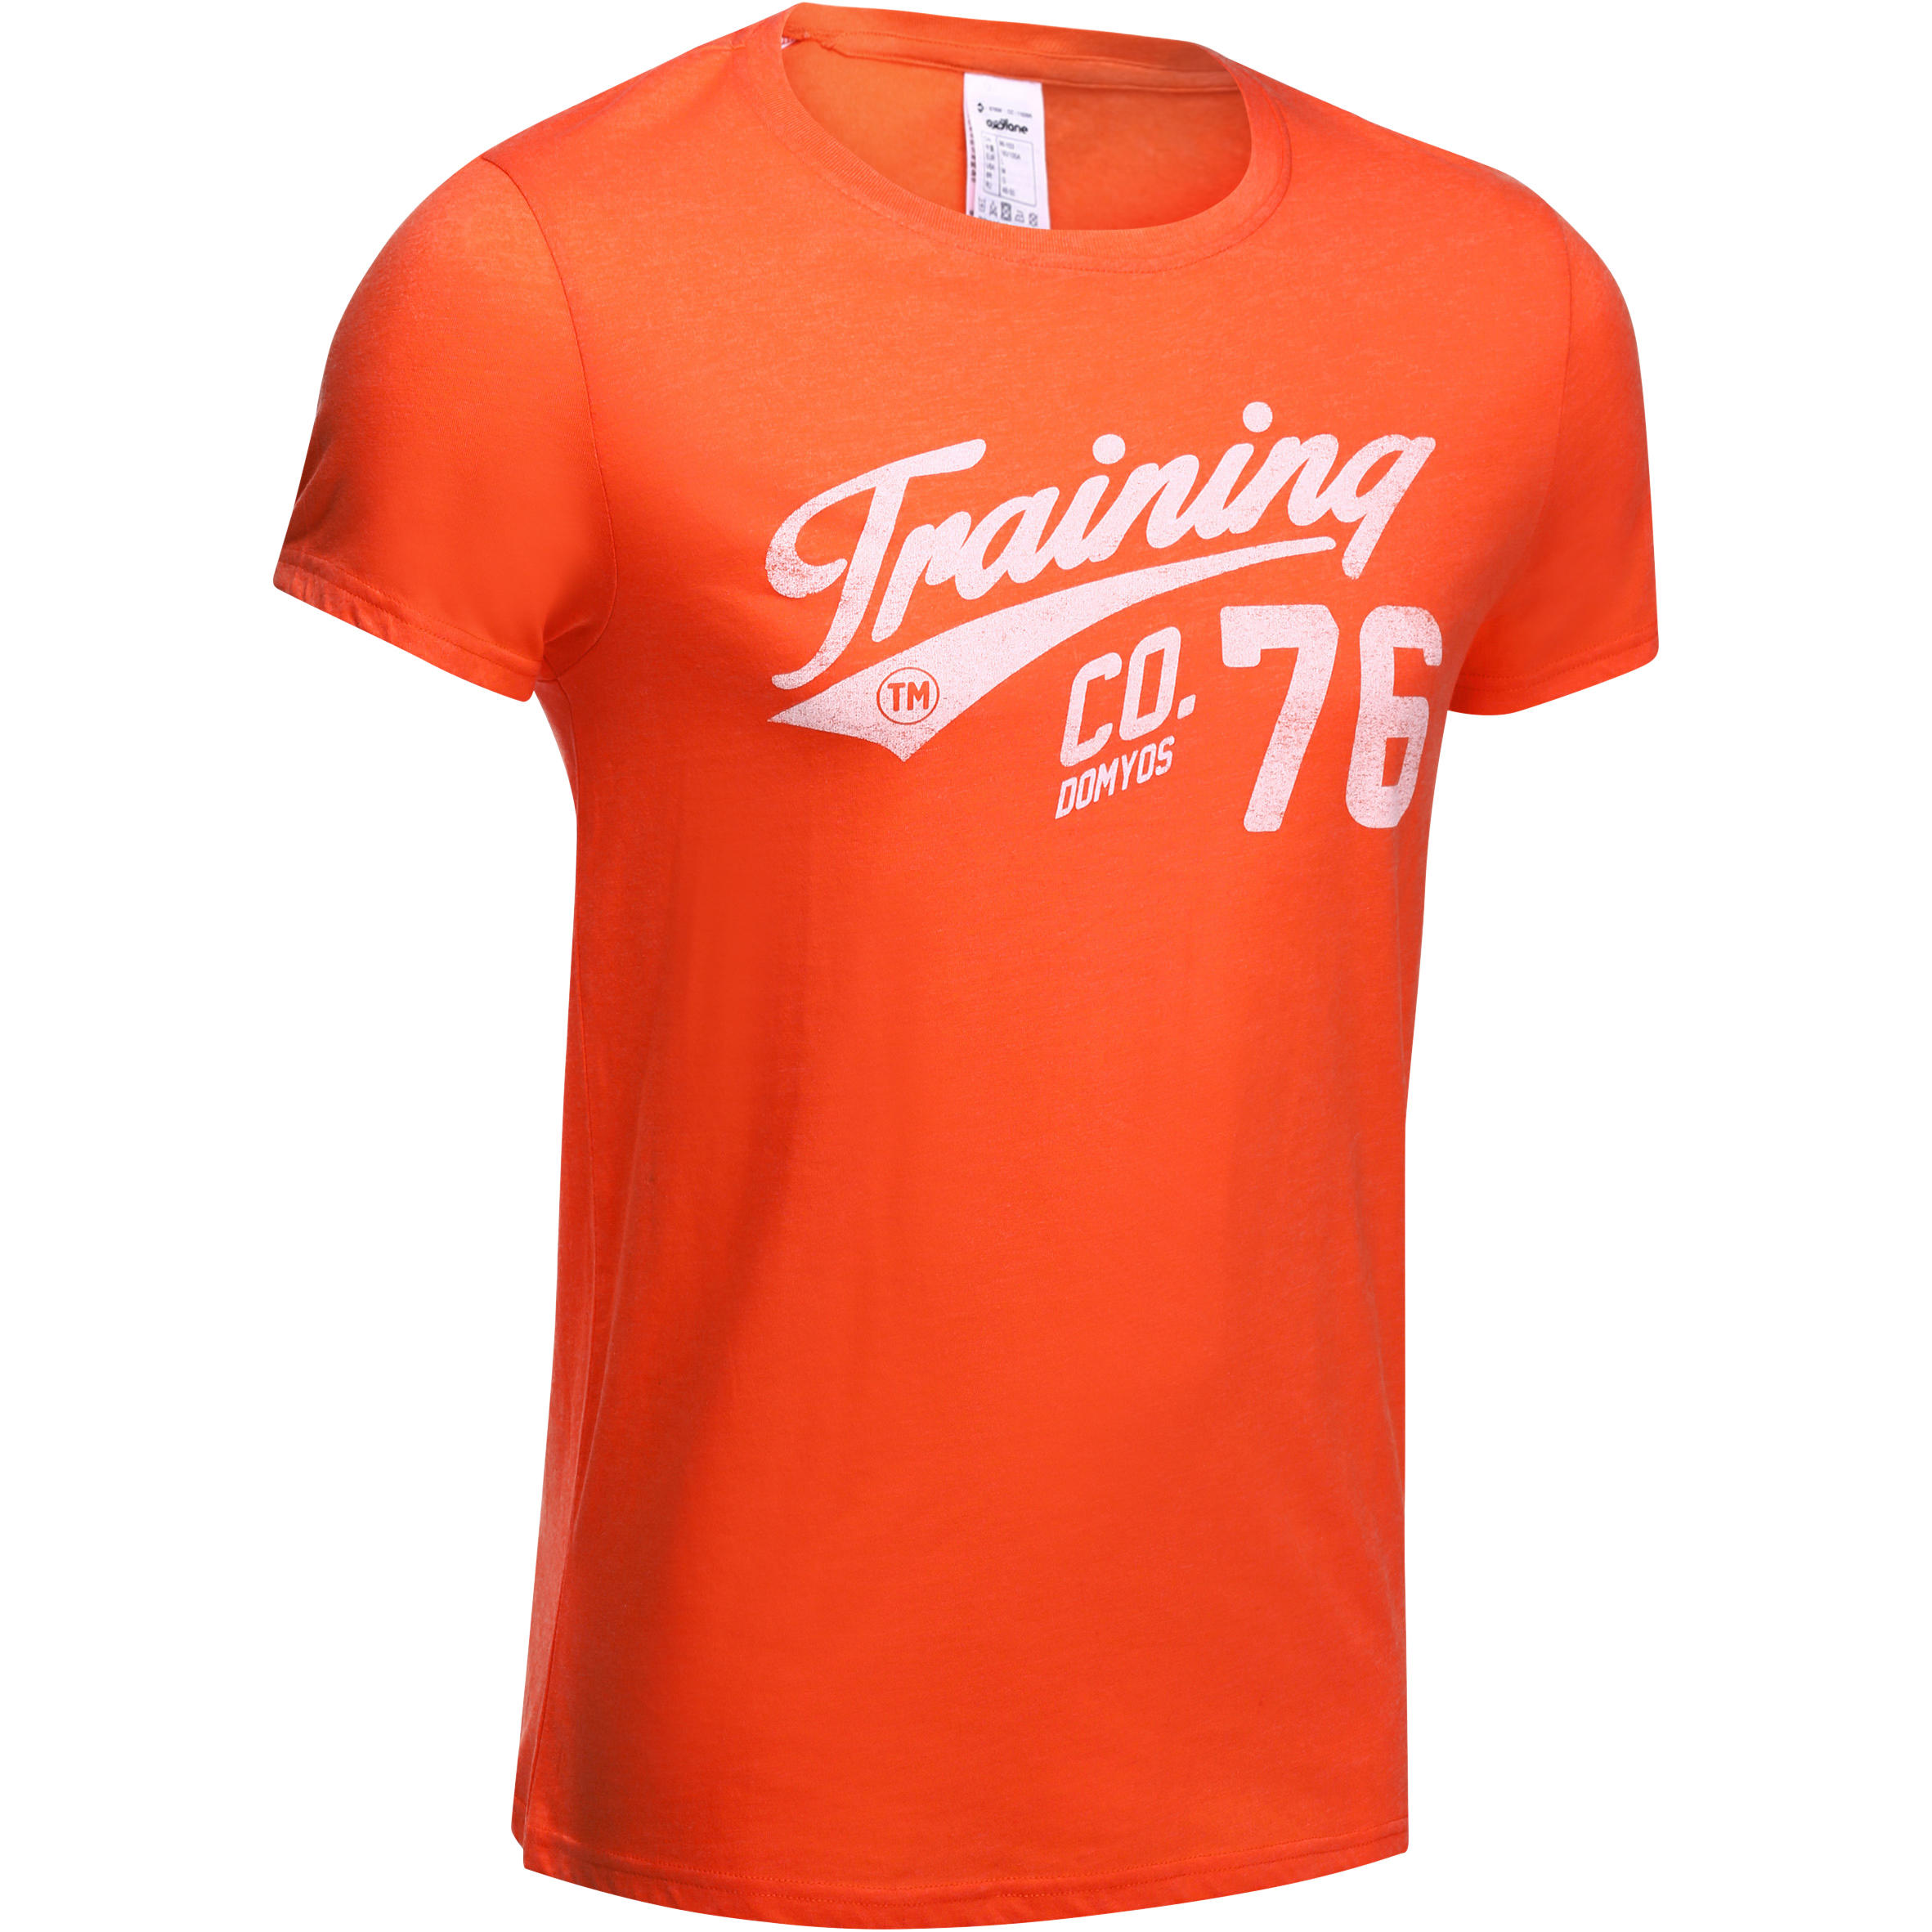 OPCO Bodybuilding T-shirt - Orange